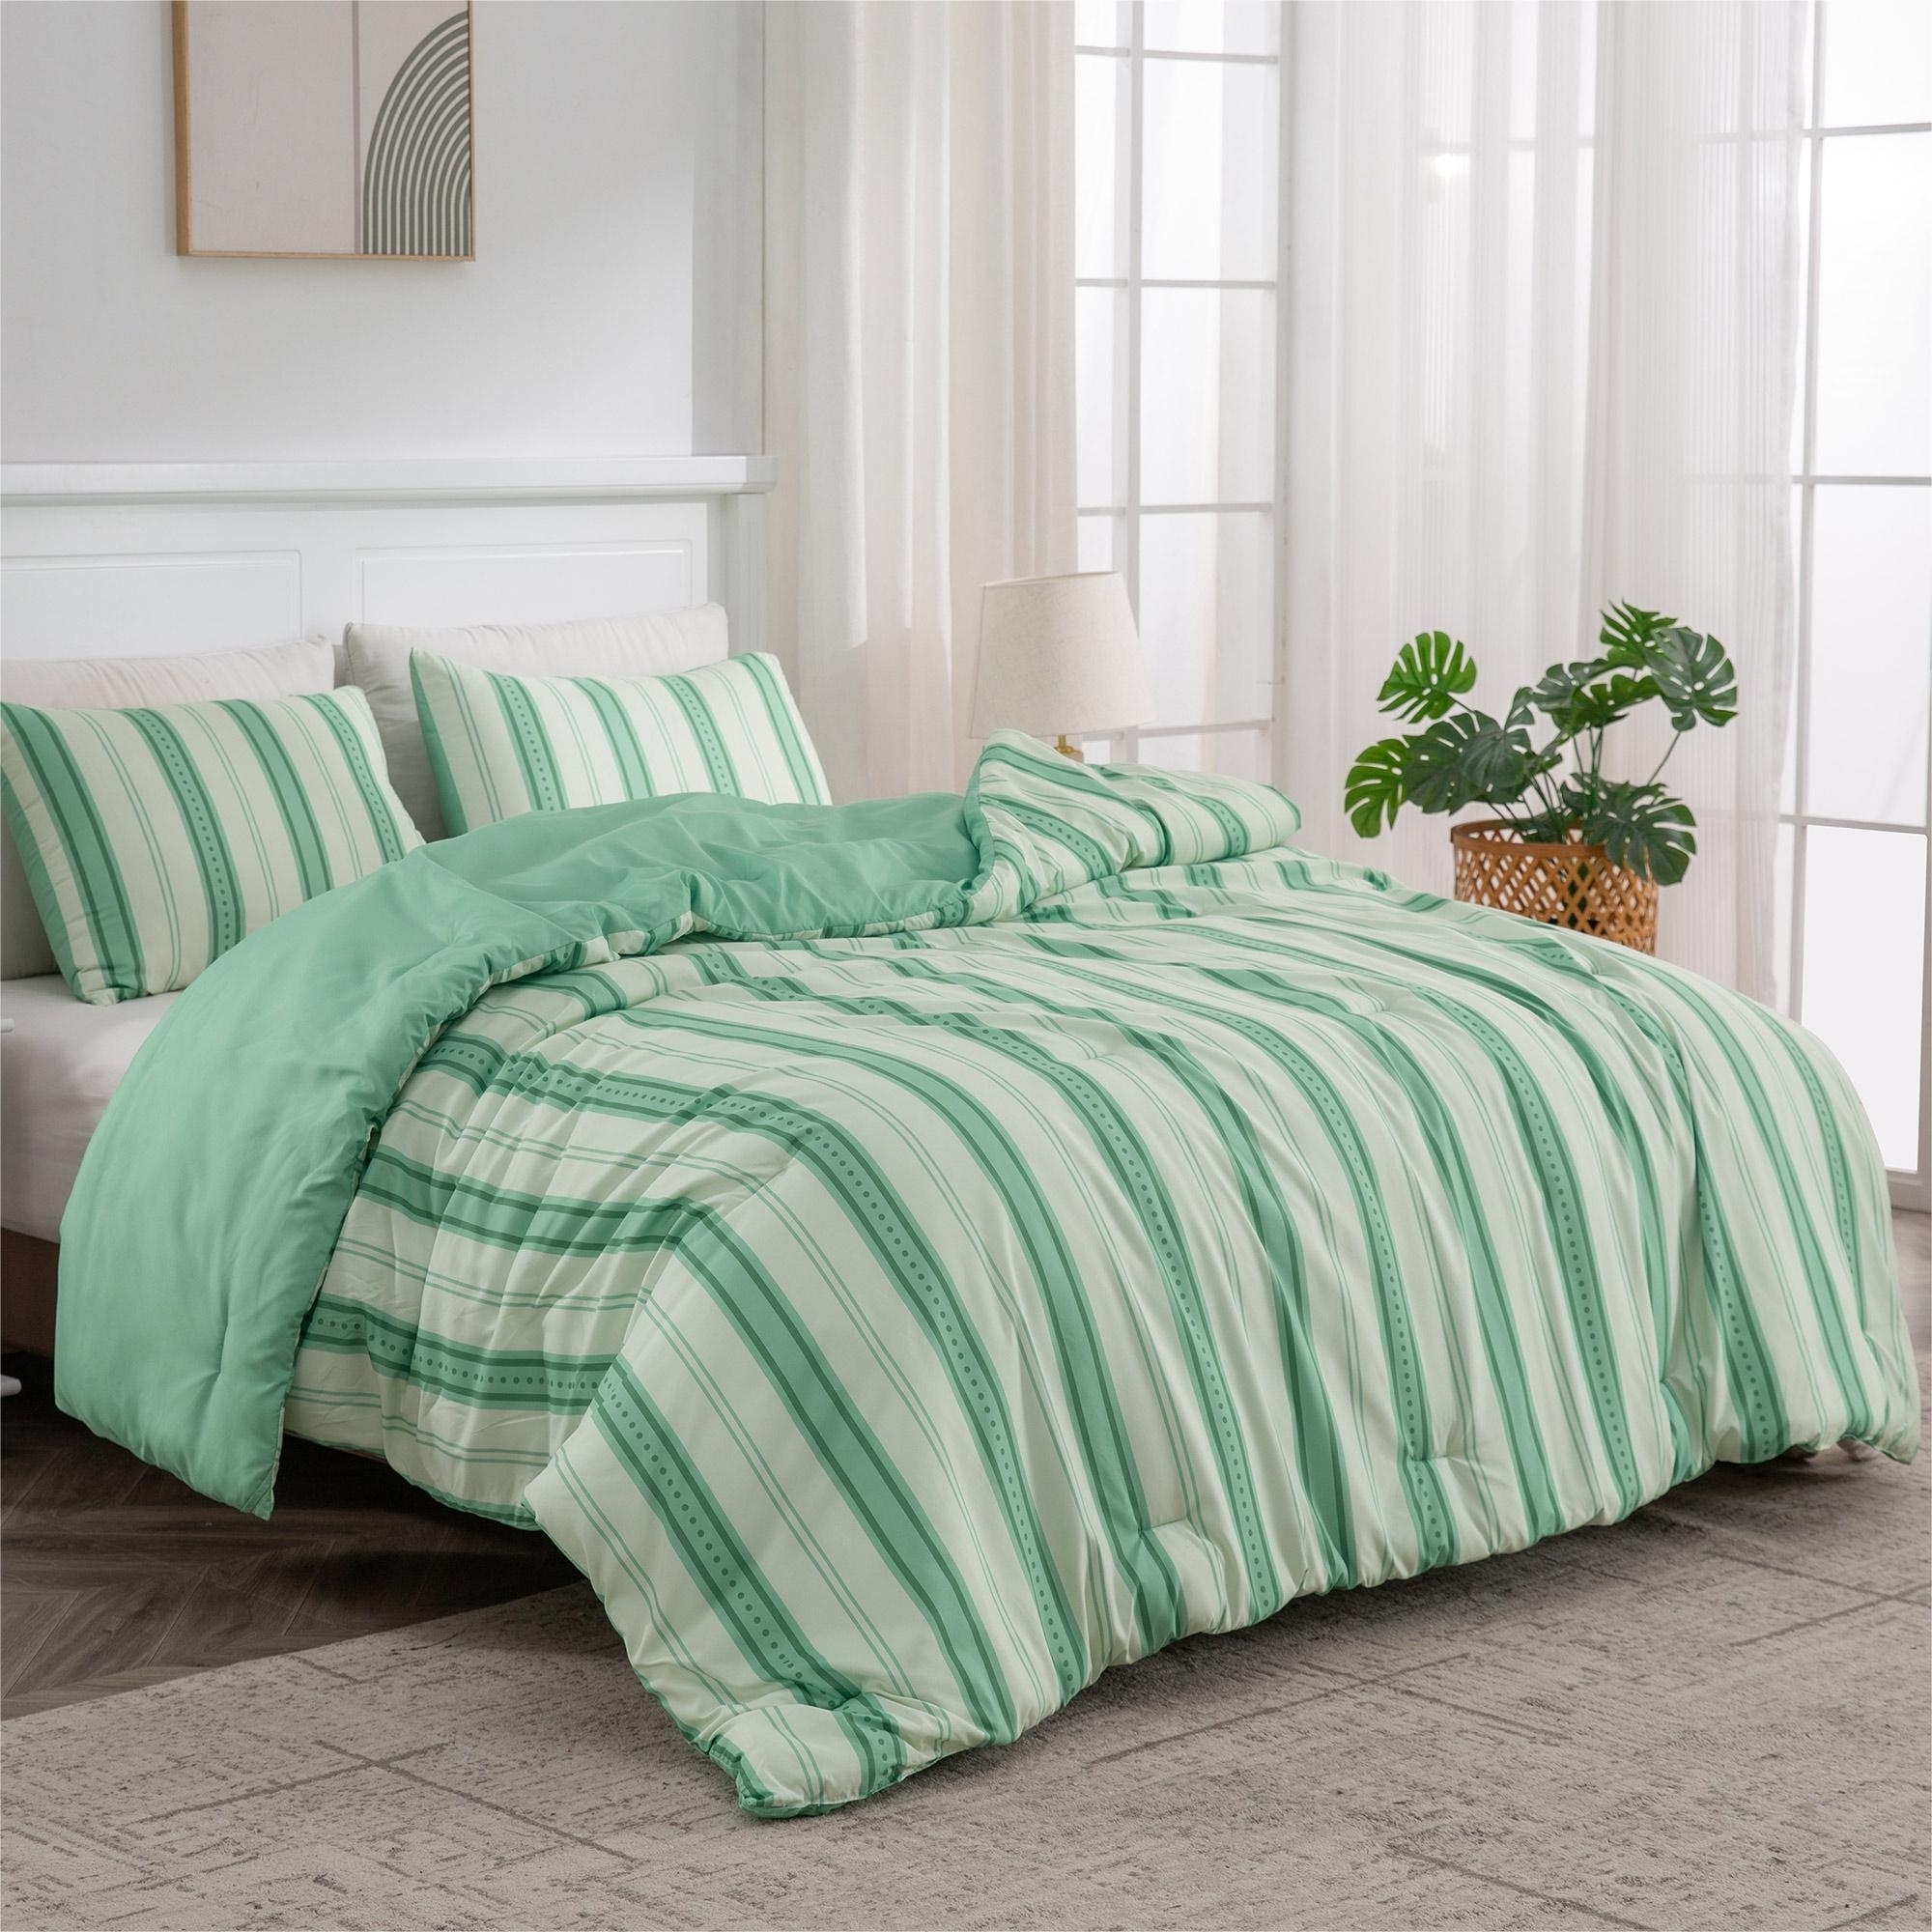 Ultra Soft Reversible Printed Stripe Microfiber Comforter Set - All-Season Warmth, Green - Full/Queen